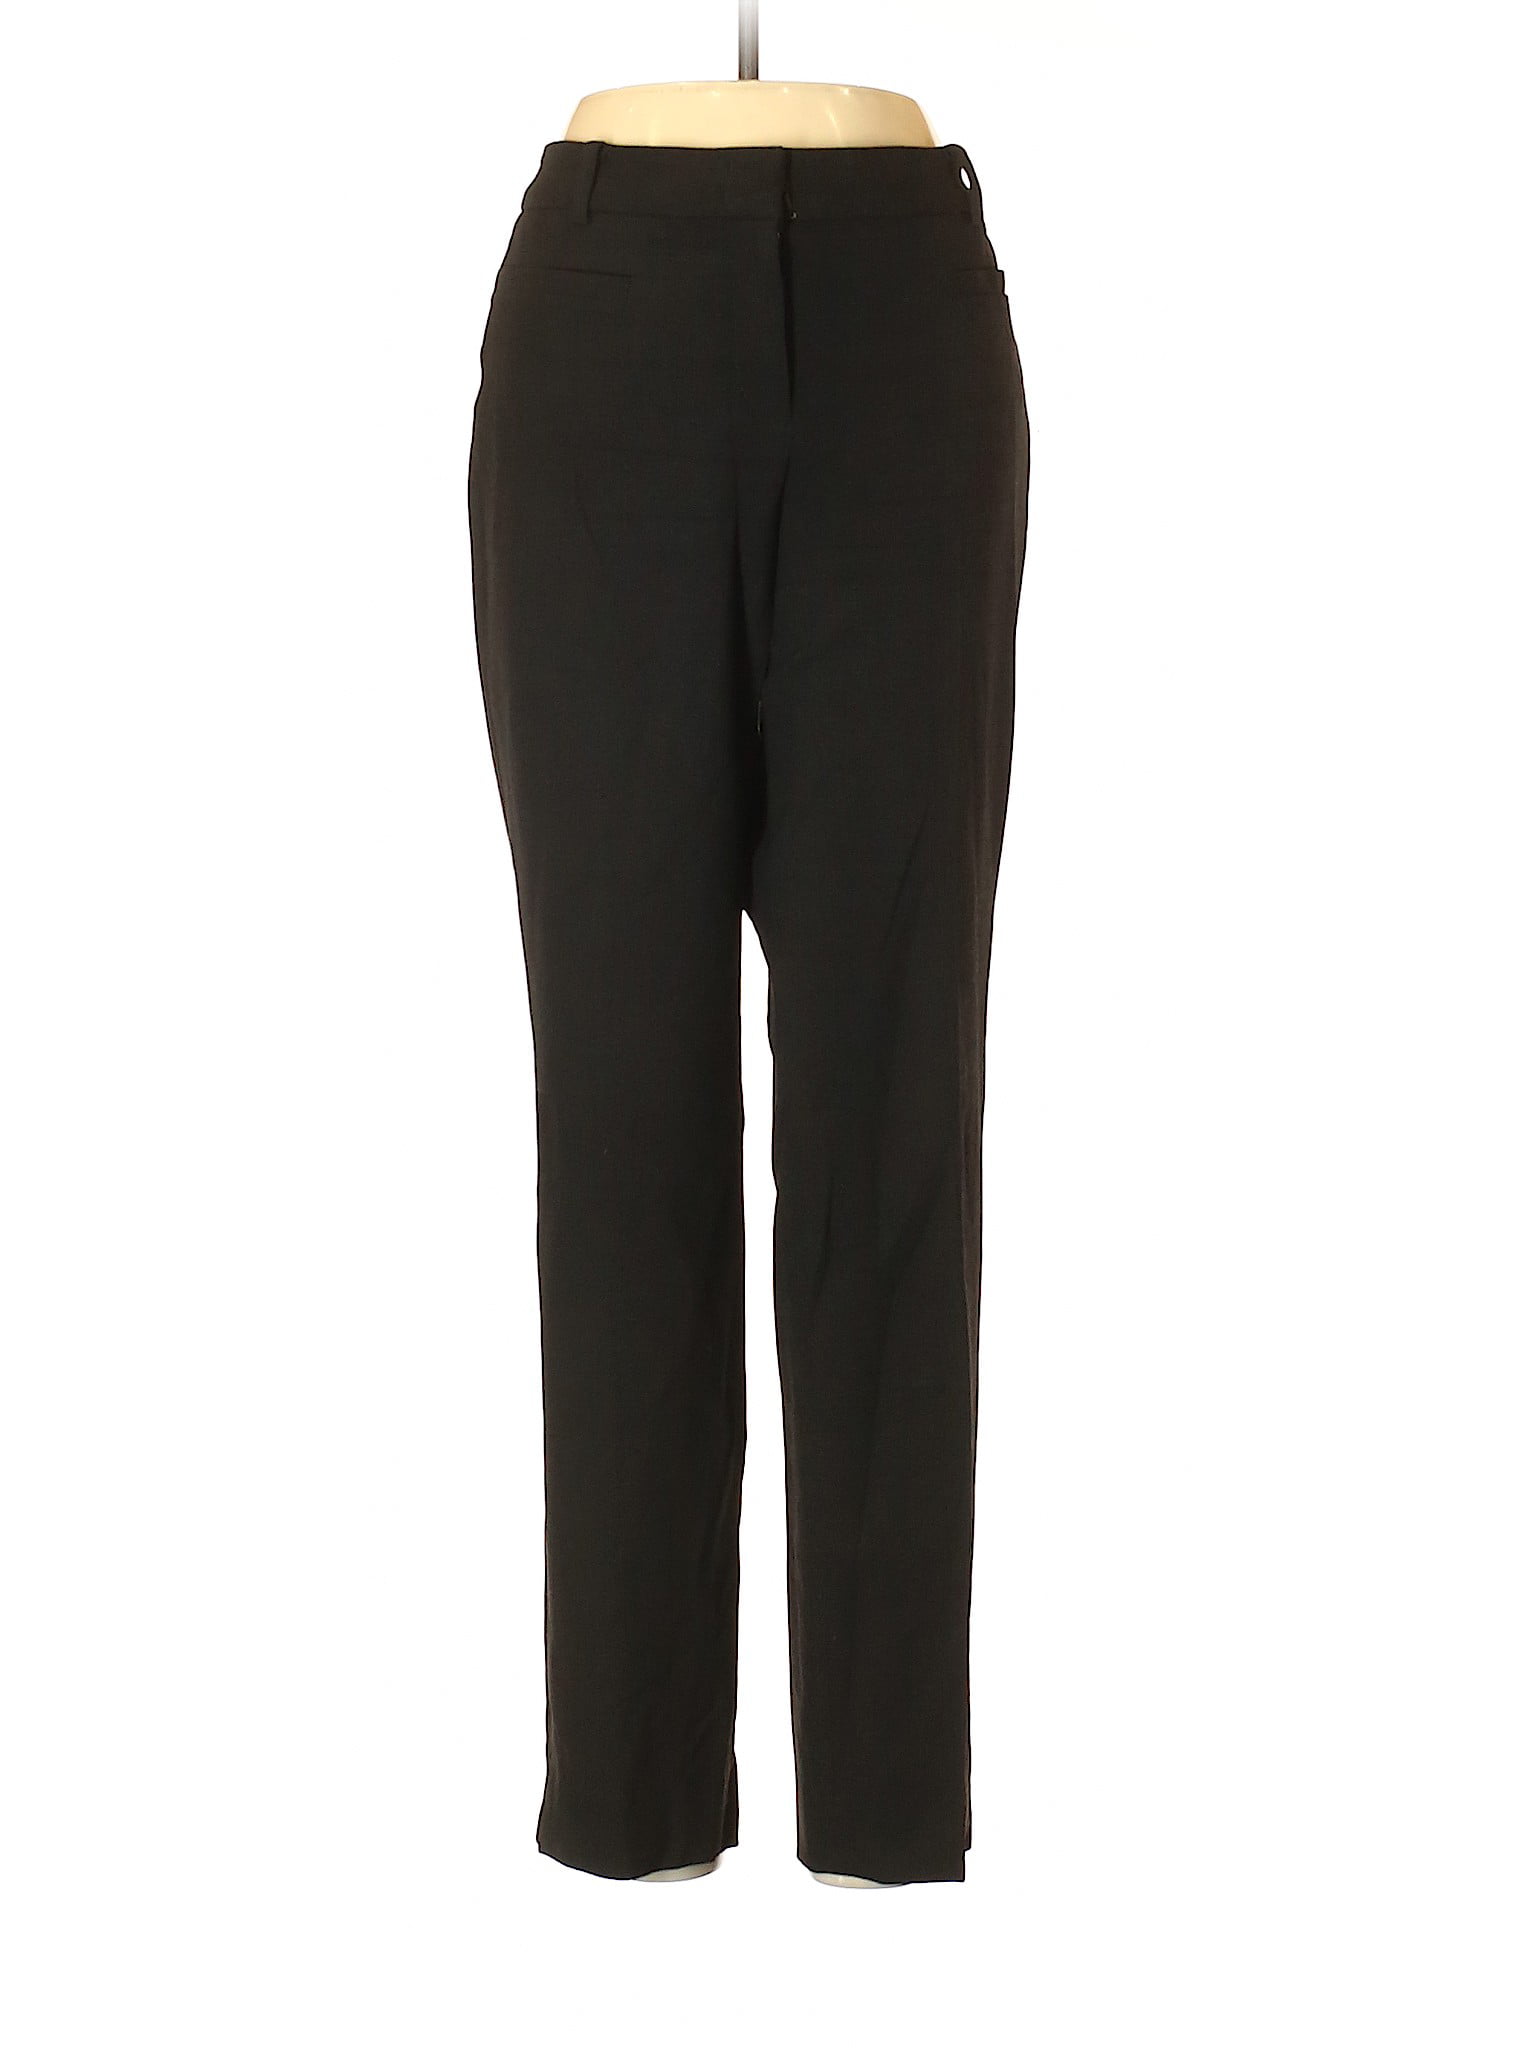 Cambio - Pre-Owned Cambio Women's Size 8 Dress Pants - Walmart.com ...